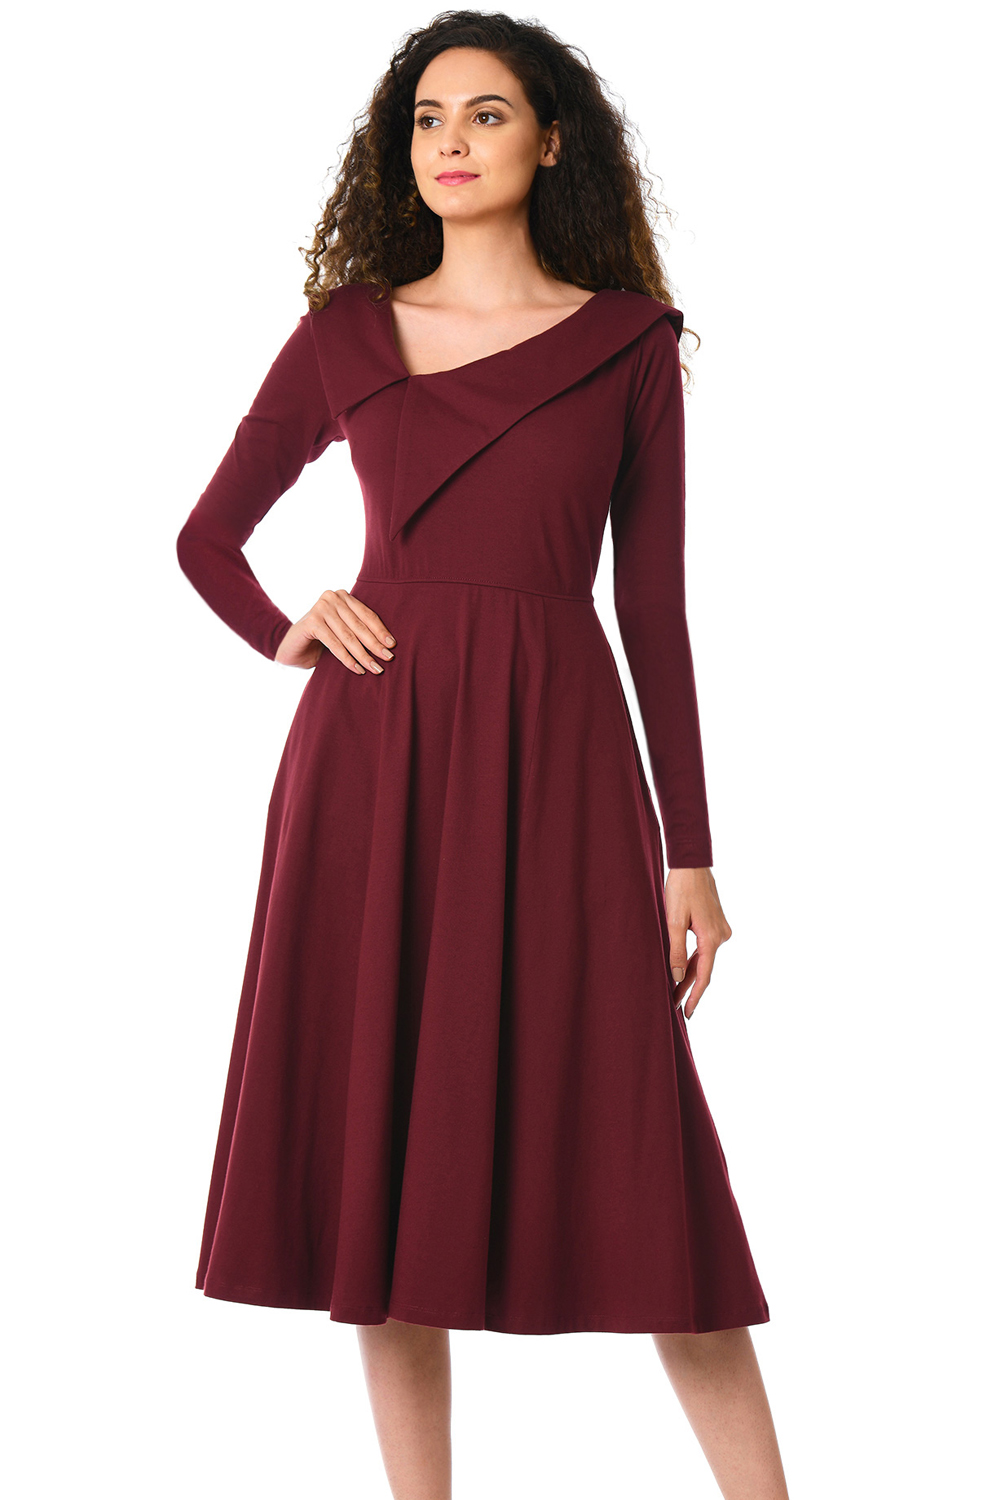 BY610388-3 Burgundy Retro Inspired Asymmetric Collar Flared Dress